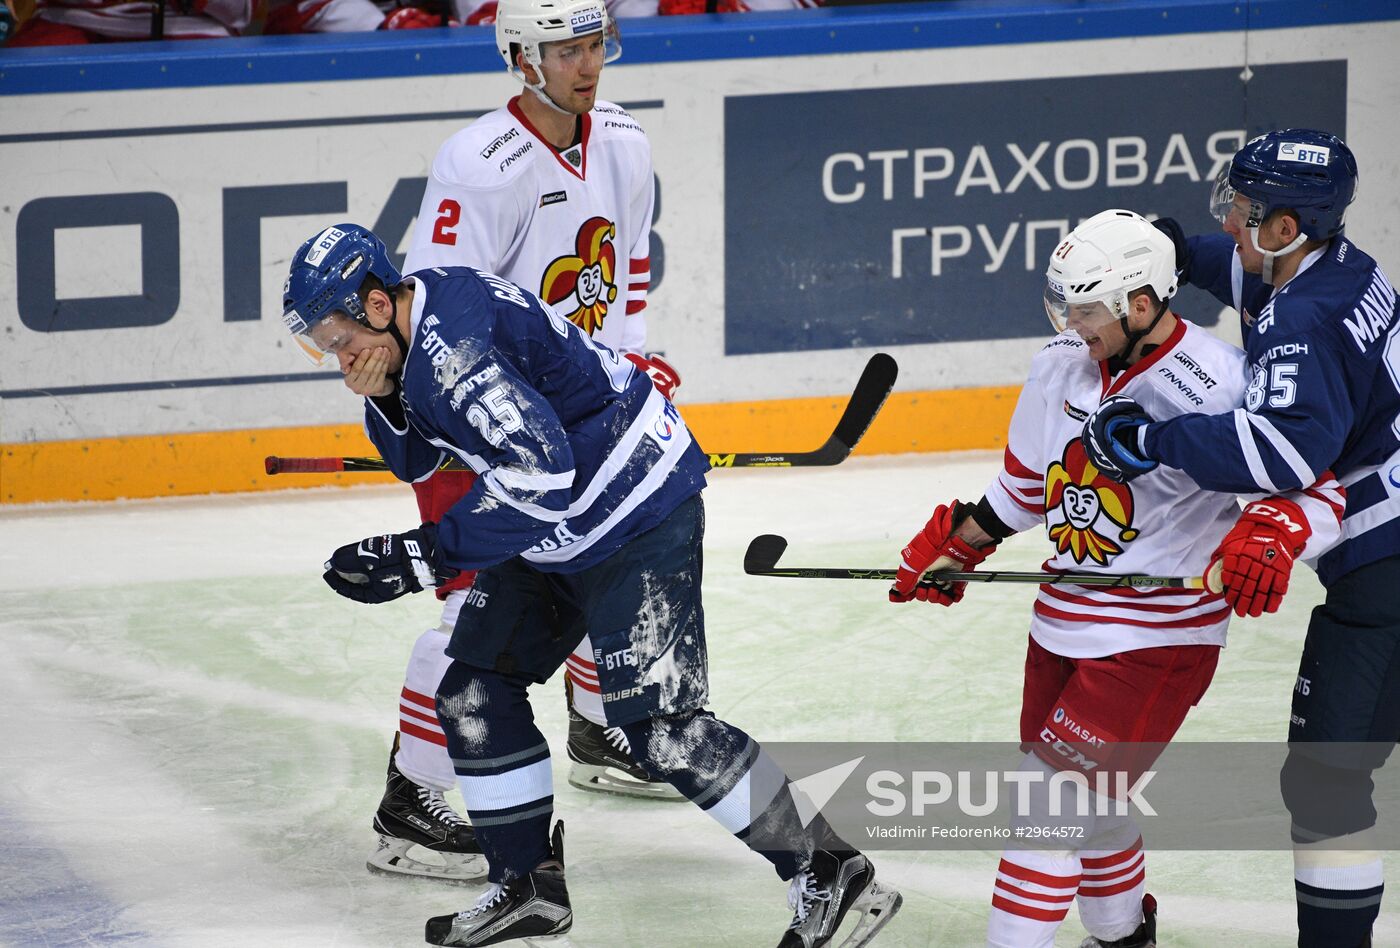 Kontinental Hockey League. Dynamo Moscow vs. Jokerit